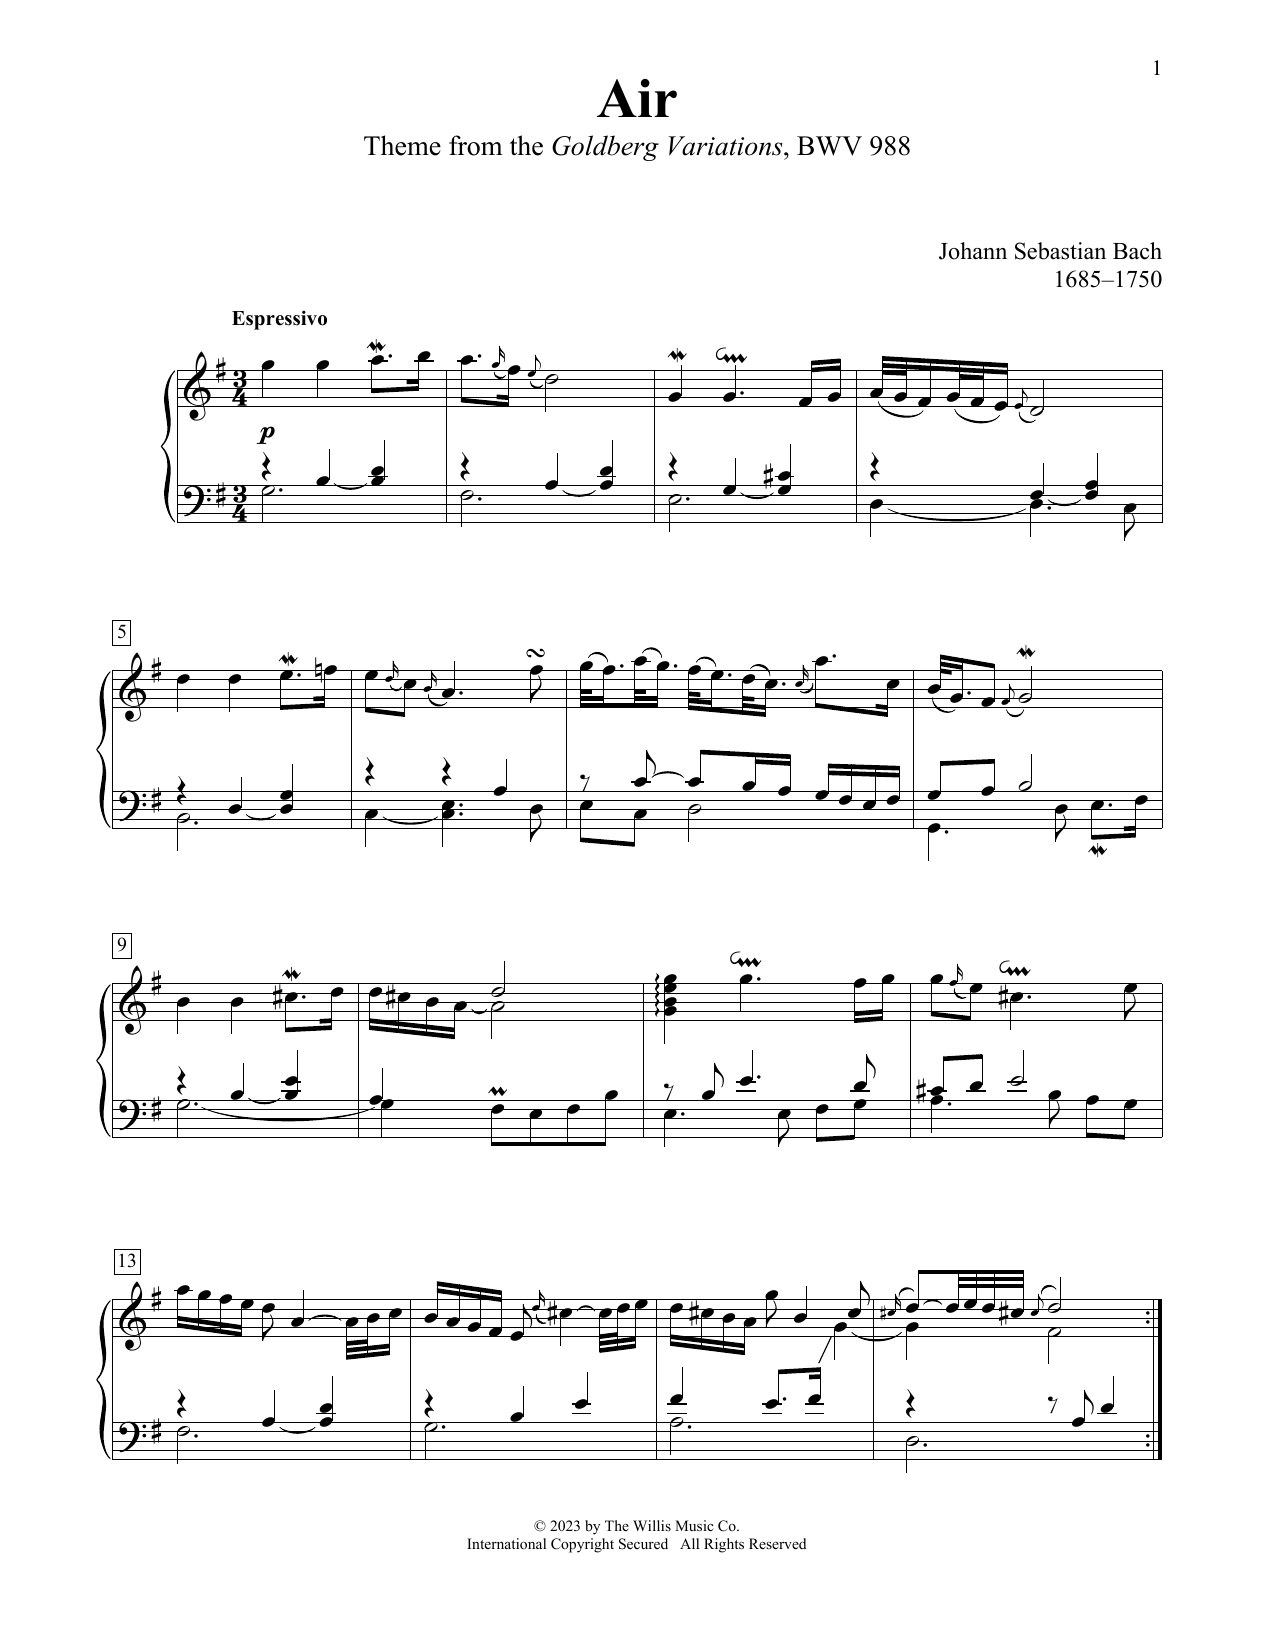 Johann Sebastian Bach Air (Theme From The Goldberg Variations, BWV 988) sheet music notes printable PDF score